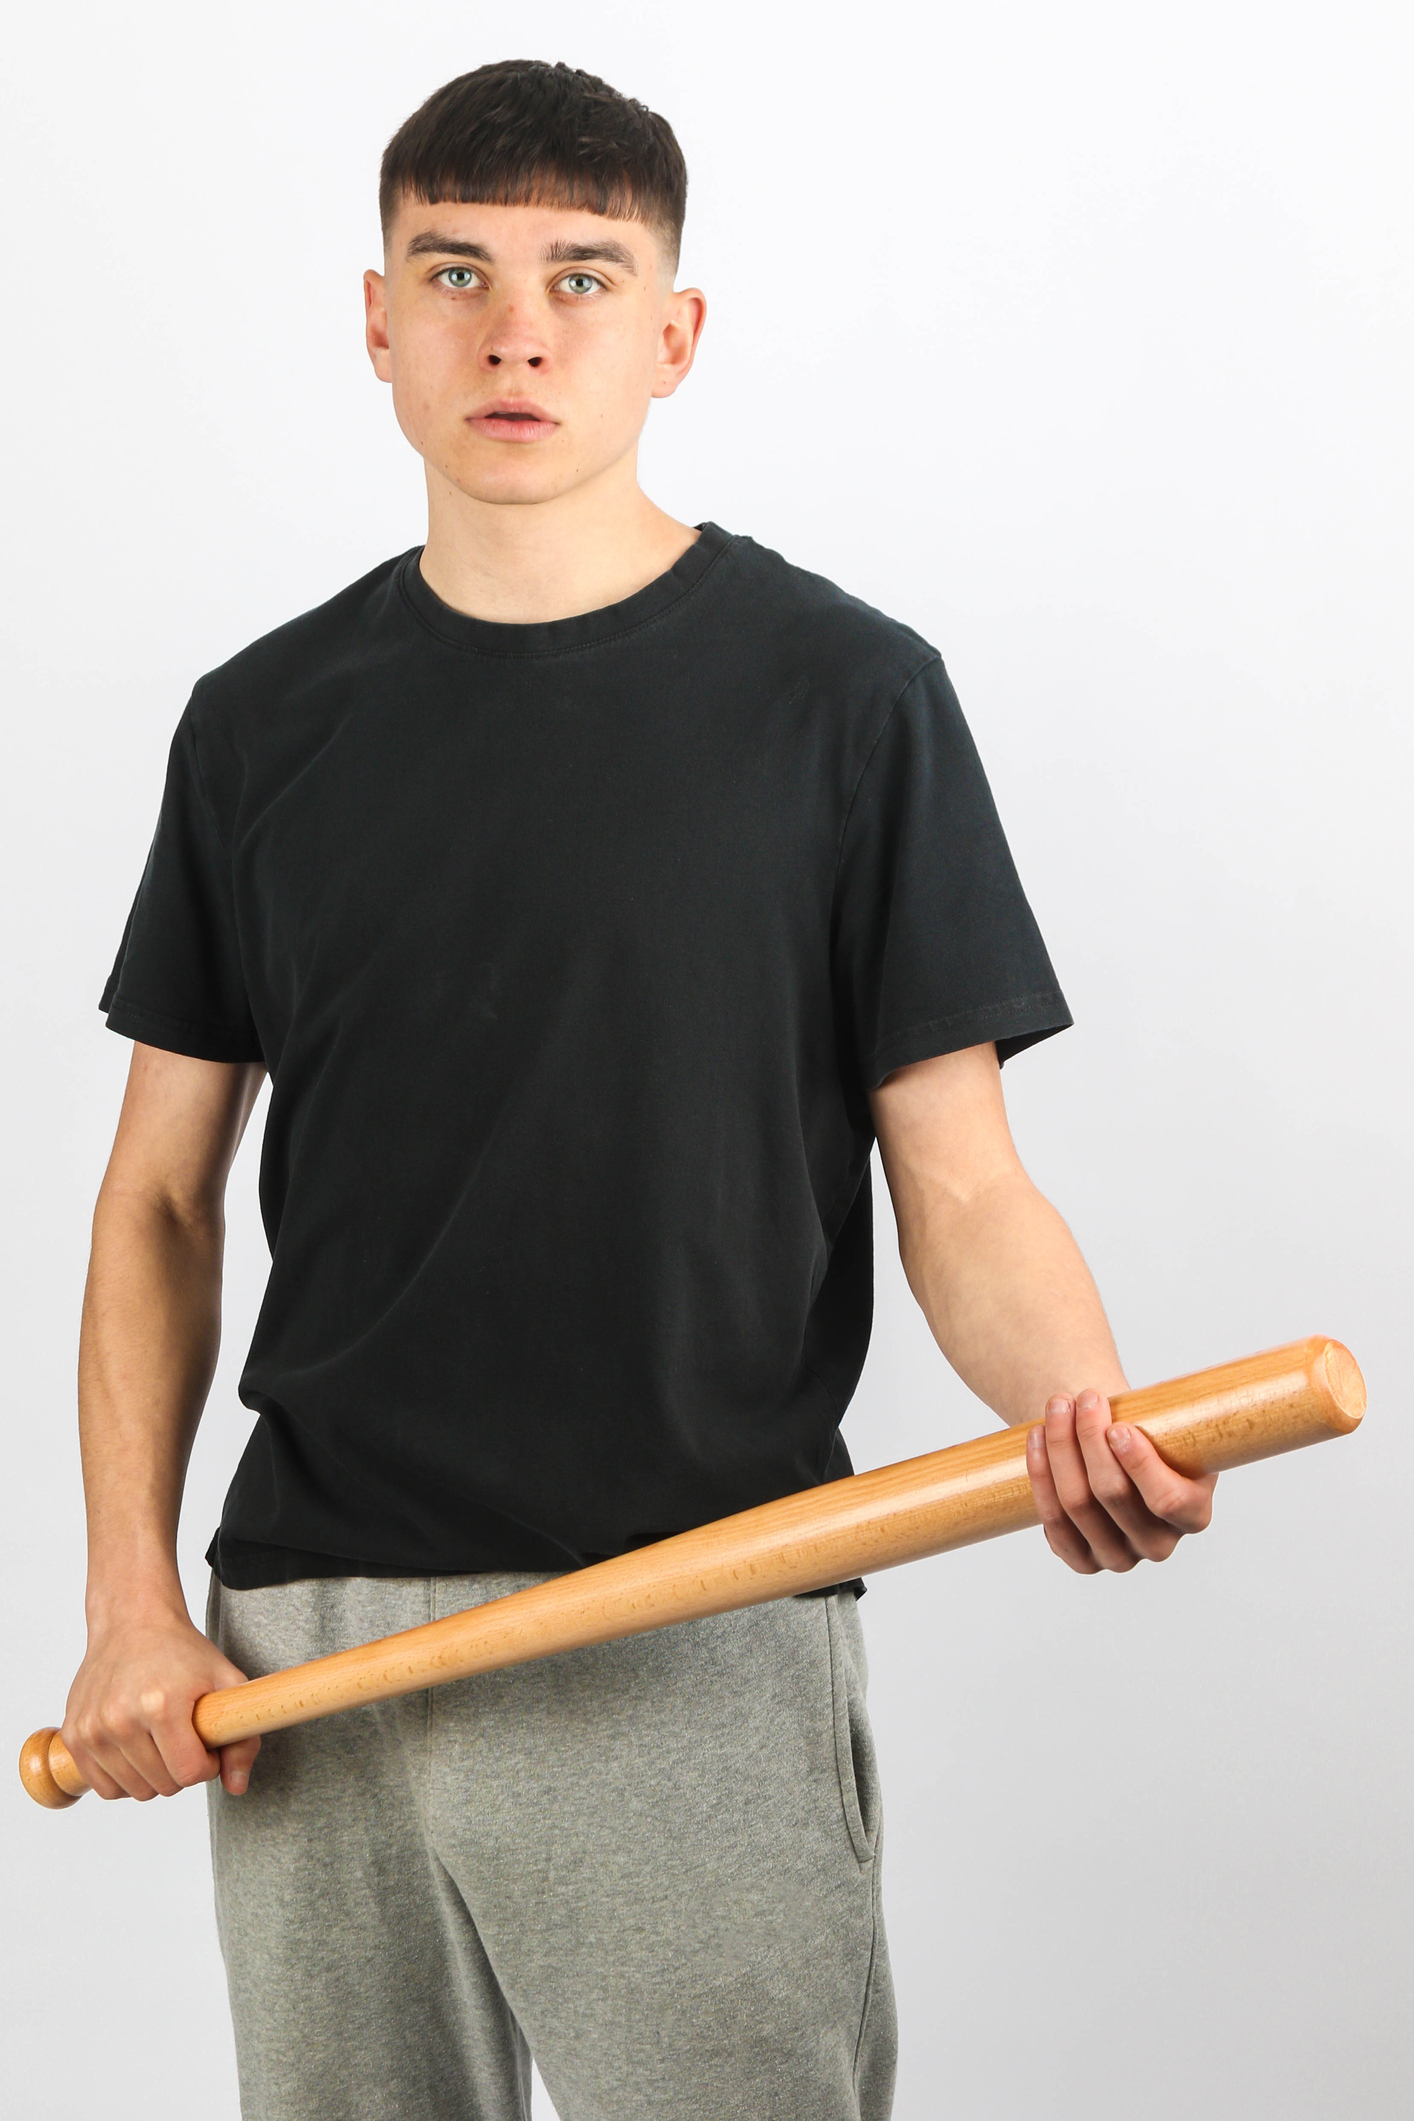 Teen boy baseball bat white background